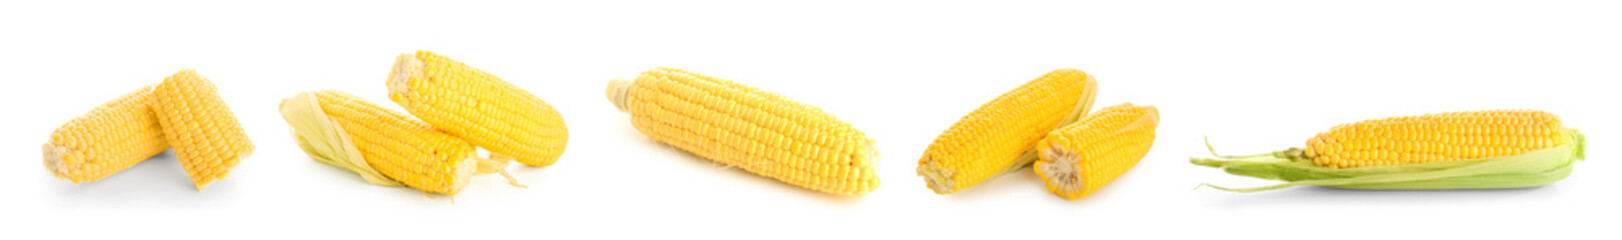 Set of ripe corn cobs on white background